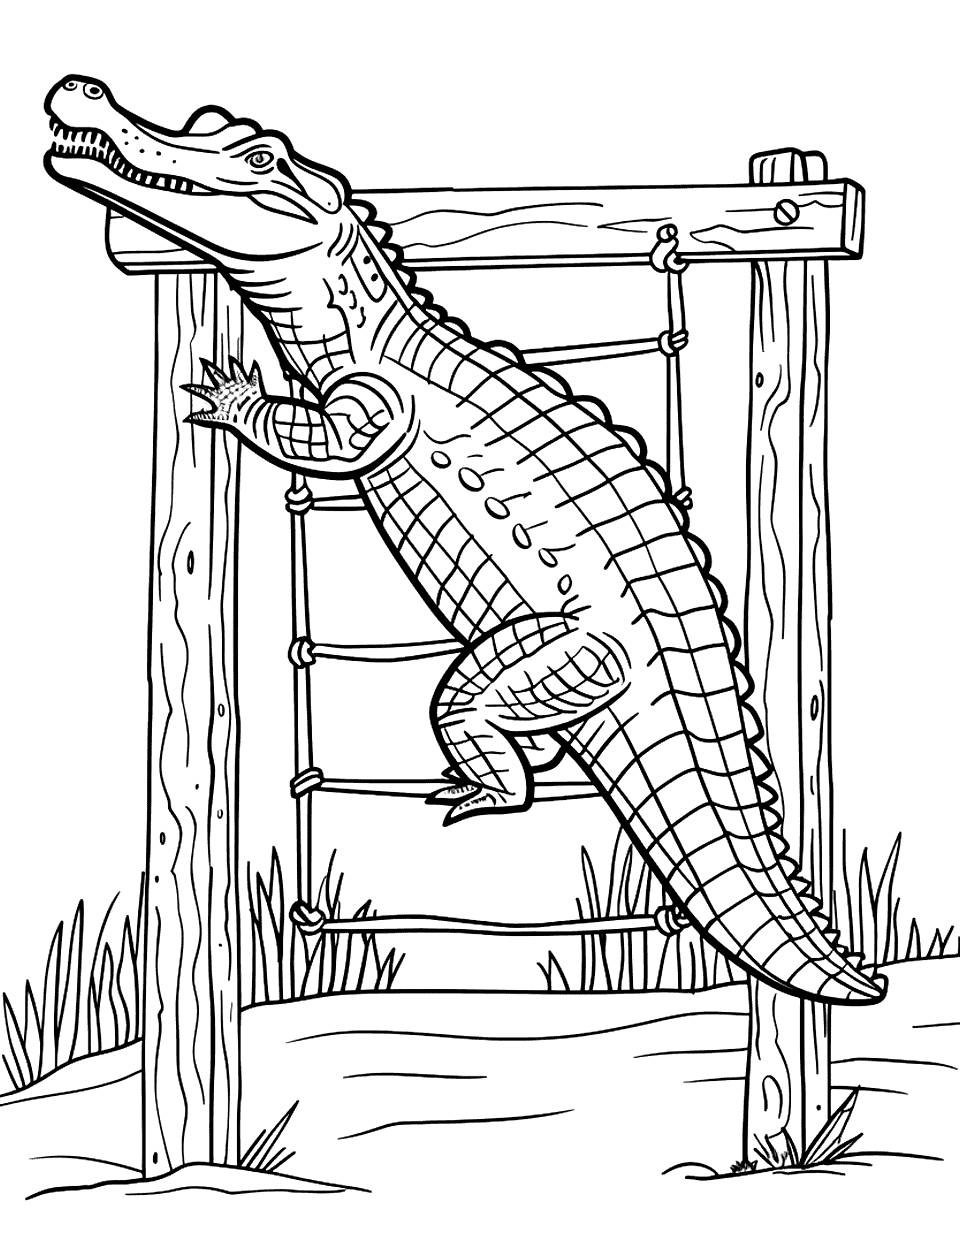 Jungle Gym Crocodile Coloring Page - A crocodile climbing on a jungle gym, showcasing its agility.